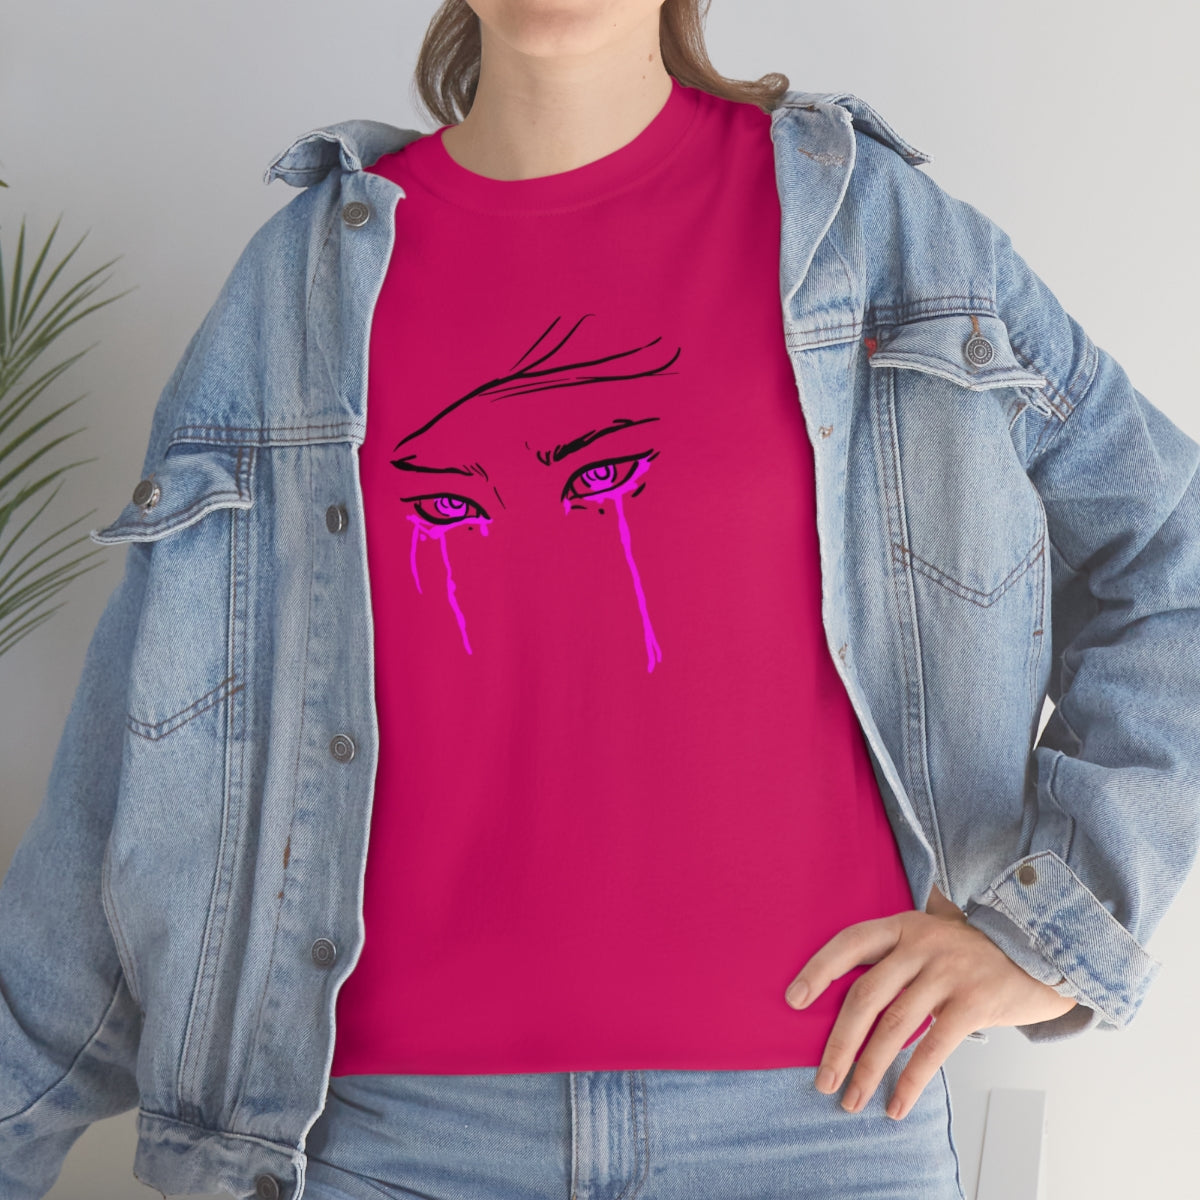 Purple Tears T-Shirt